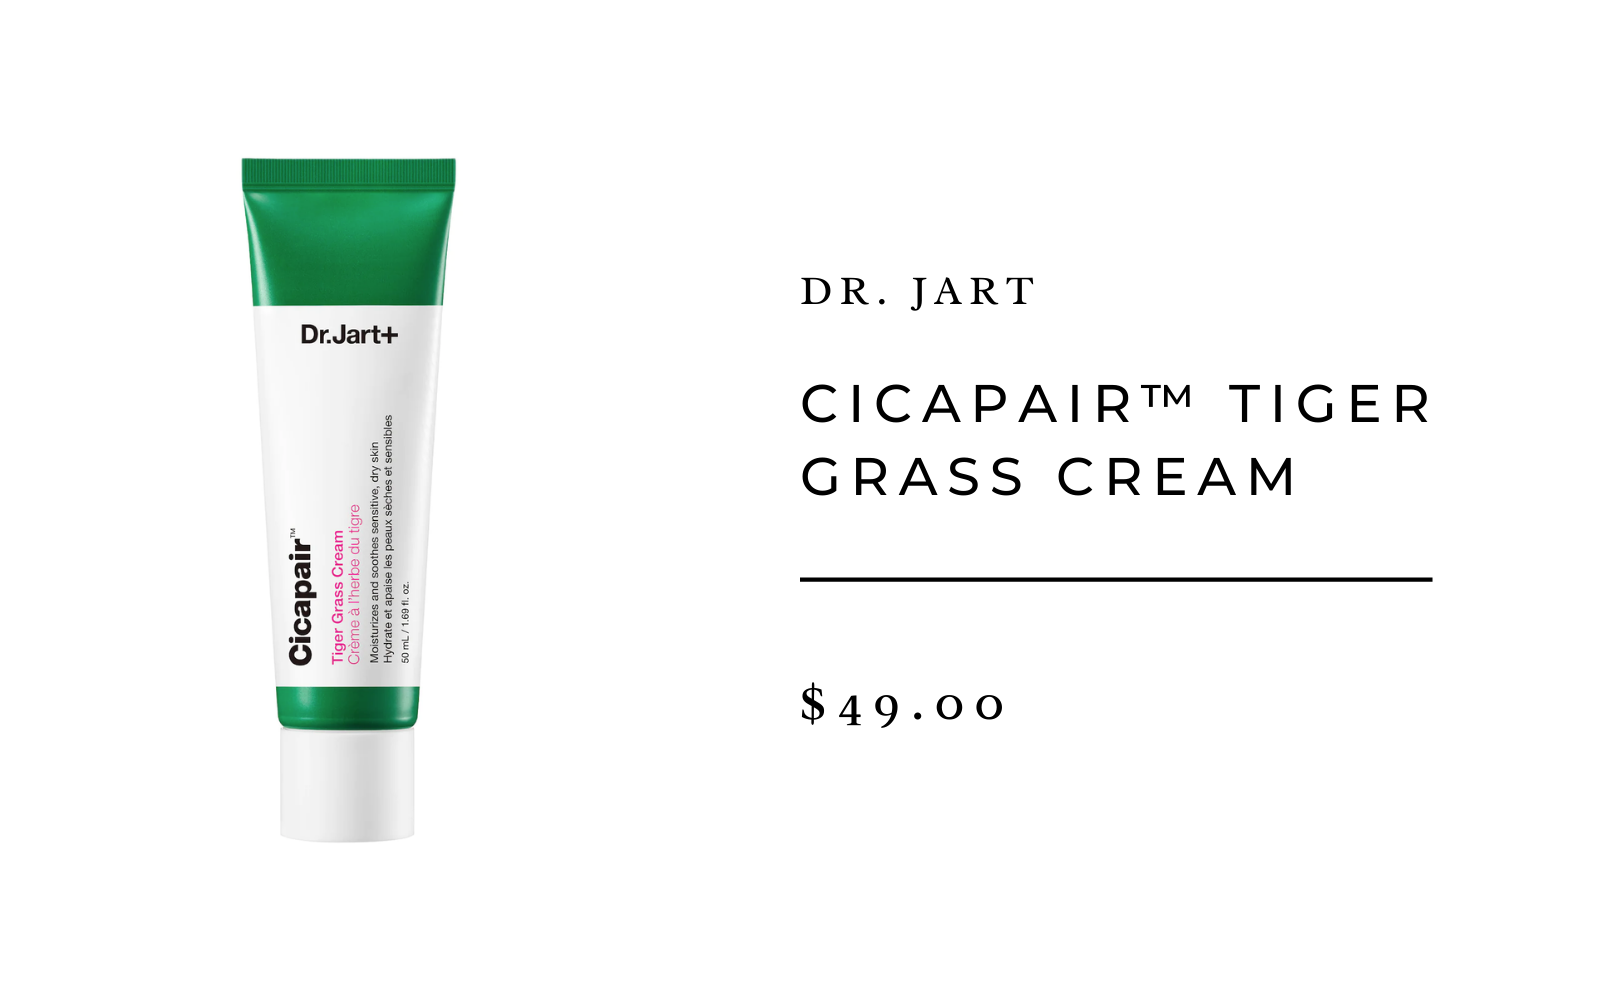 Dr. Jart Cicapair Tiger Grass Cream